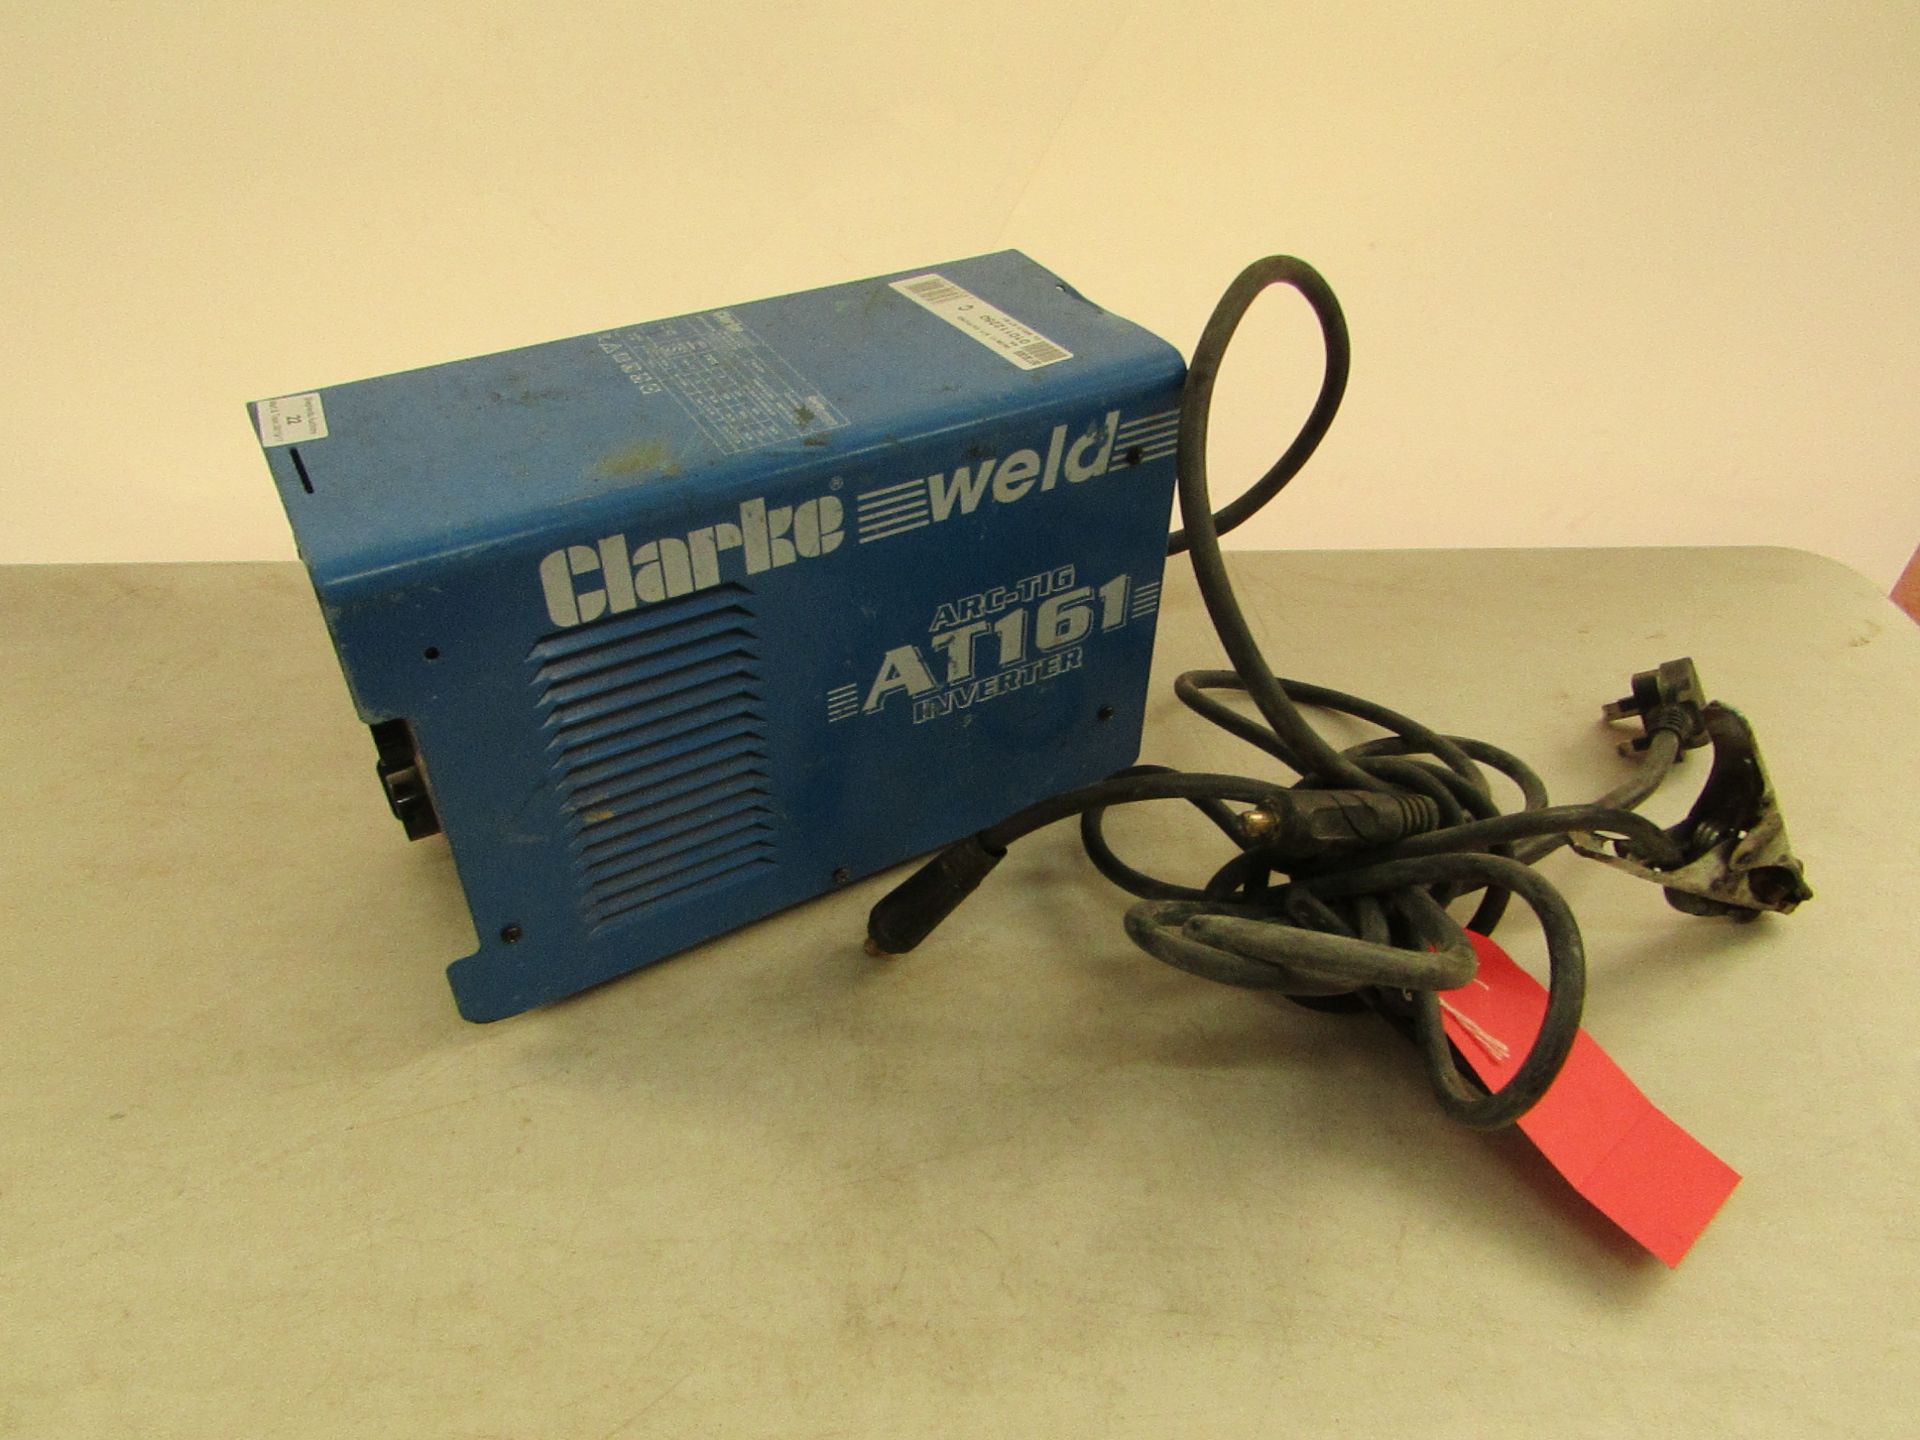 Clarke TIG welding torch assembly for AT161 inverter www.machinemart.co.uk/p/clarke-tig-welding-